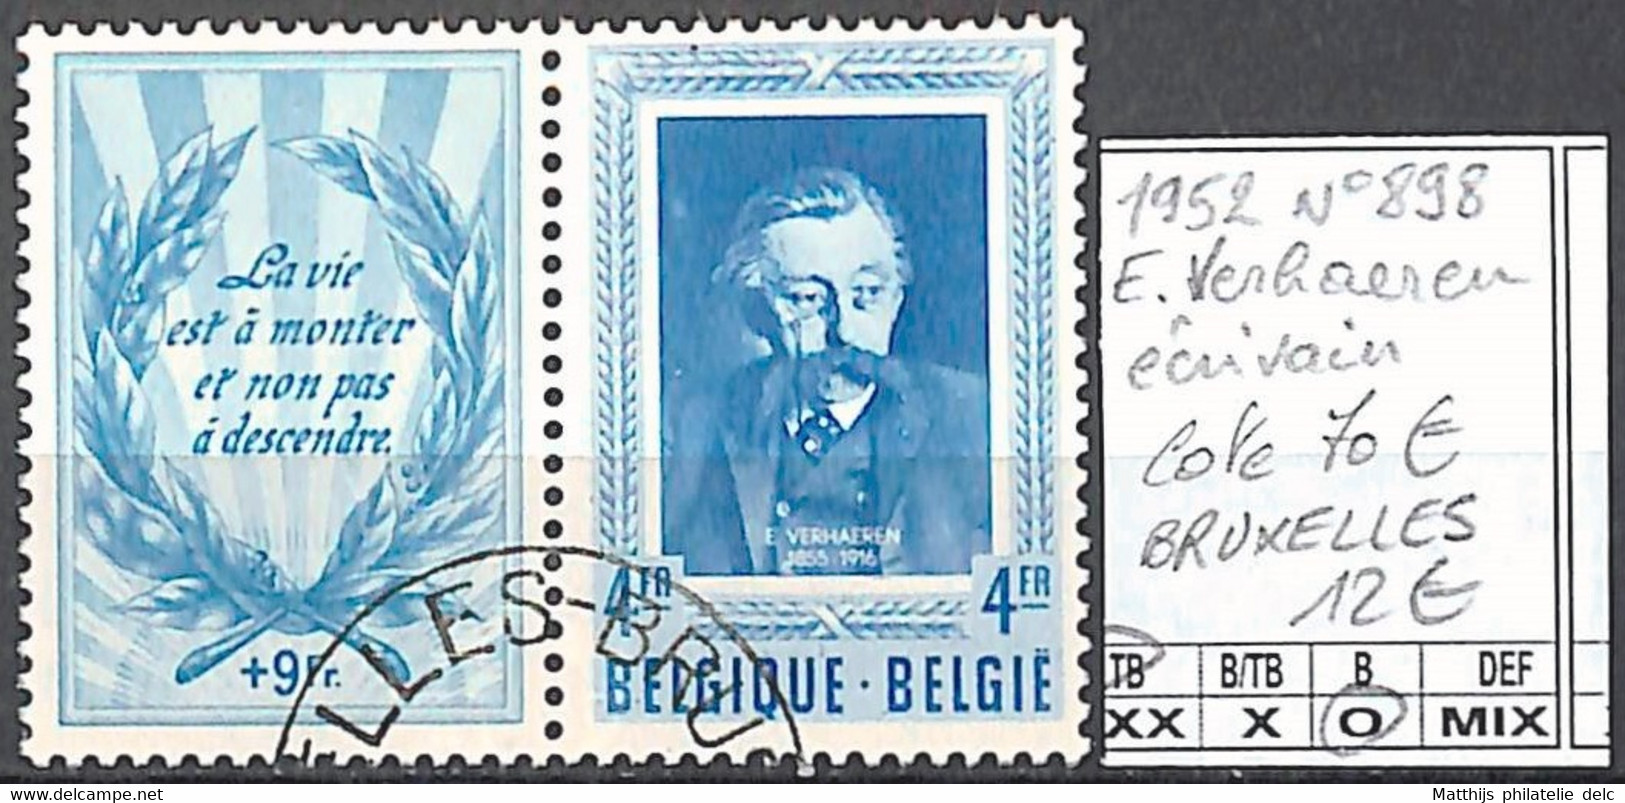 NB - [844752]TB//O/Used-c:70e-Belgique 1952 - N° 898, 4f+9f (vignette) E. Verhaeren, 'BRUXELLES', Ecrivains - Schriftsteller